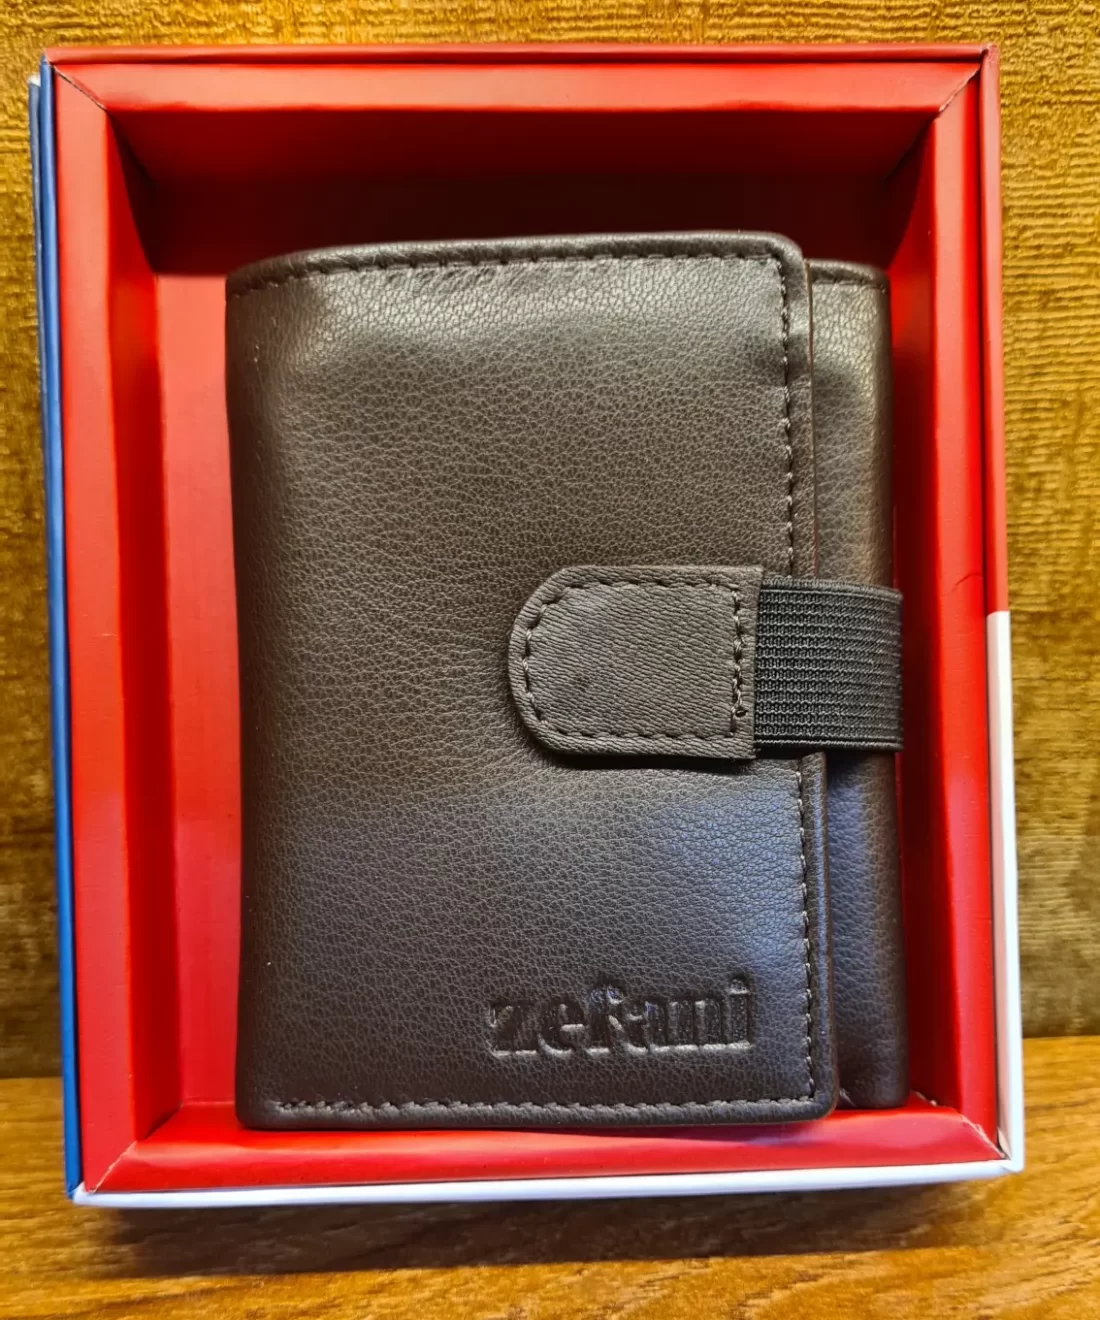 Black strap-fastening leather wallet